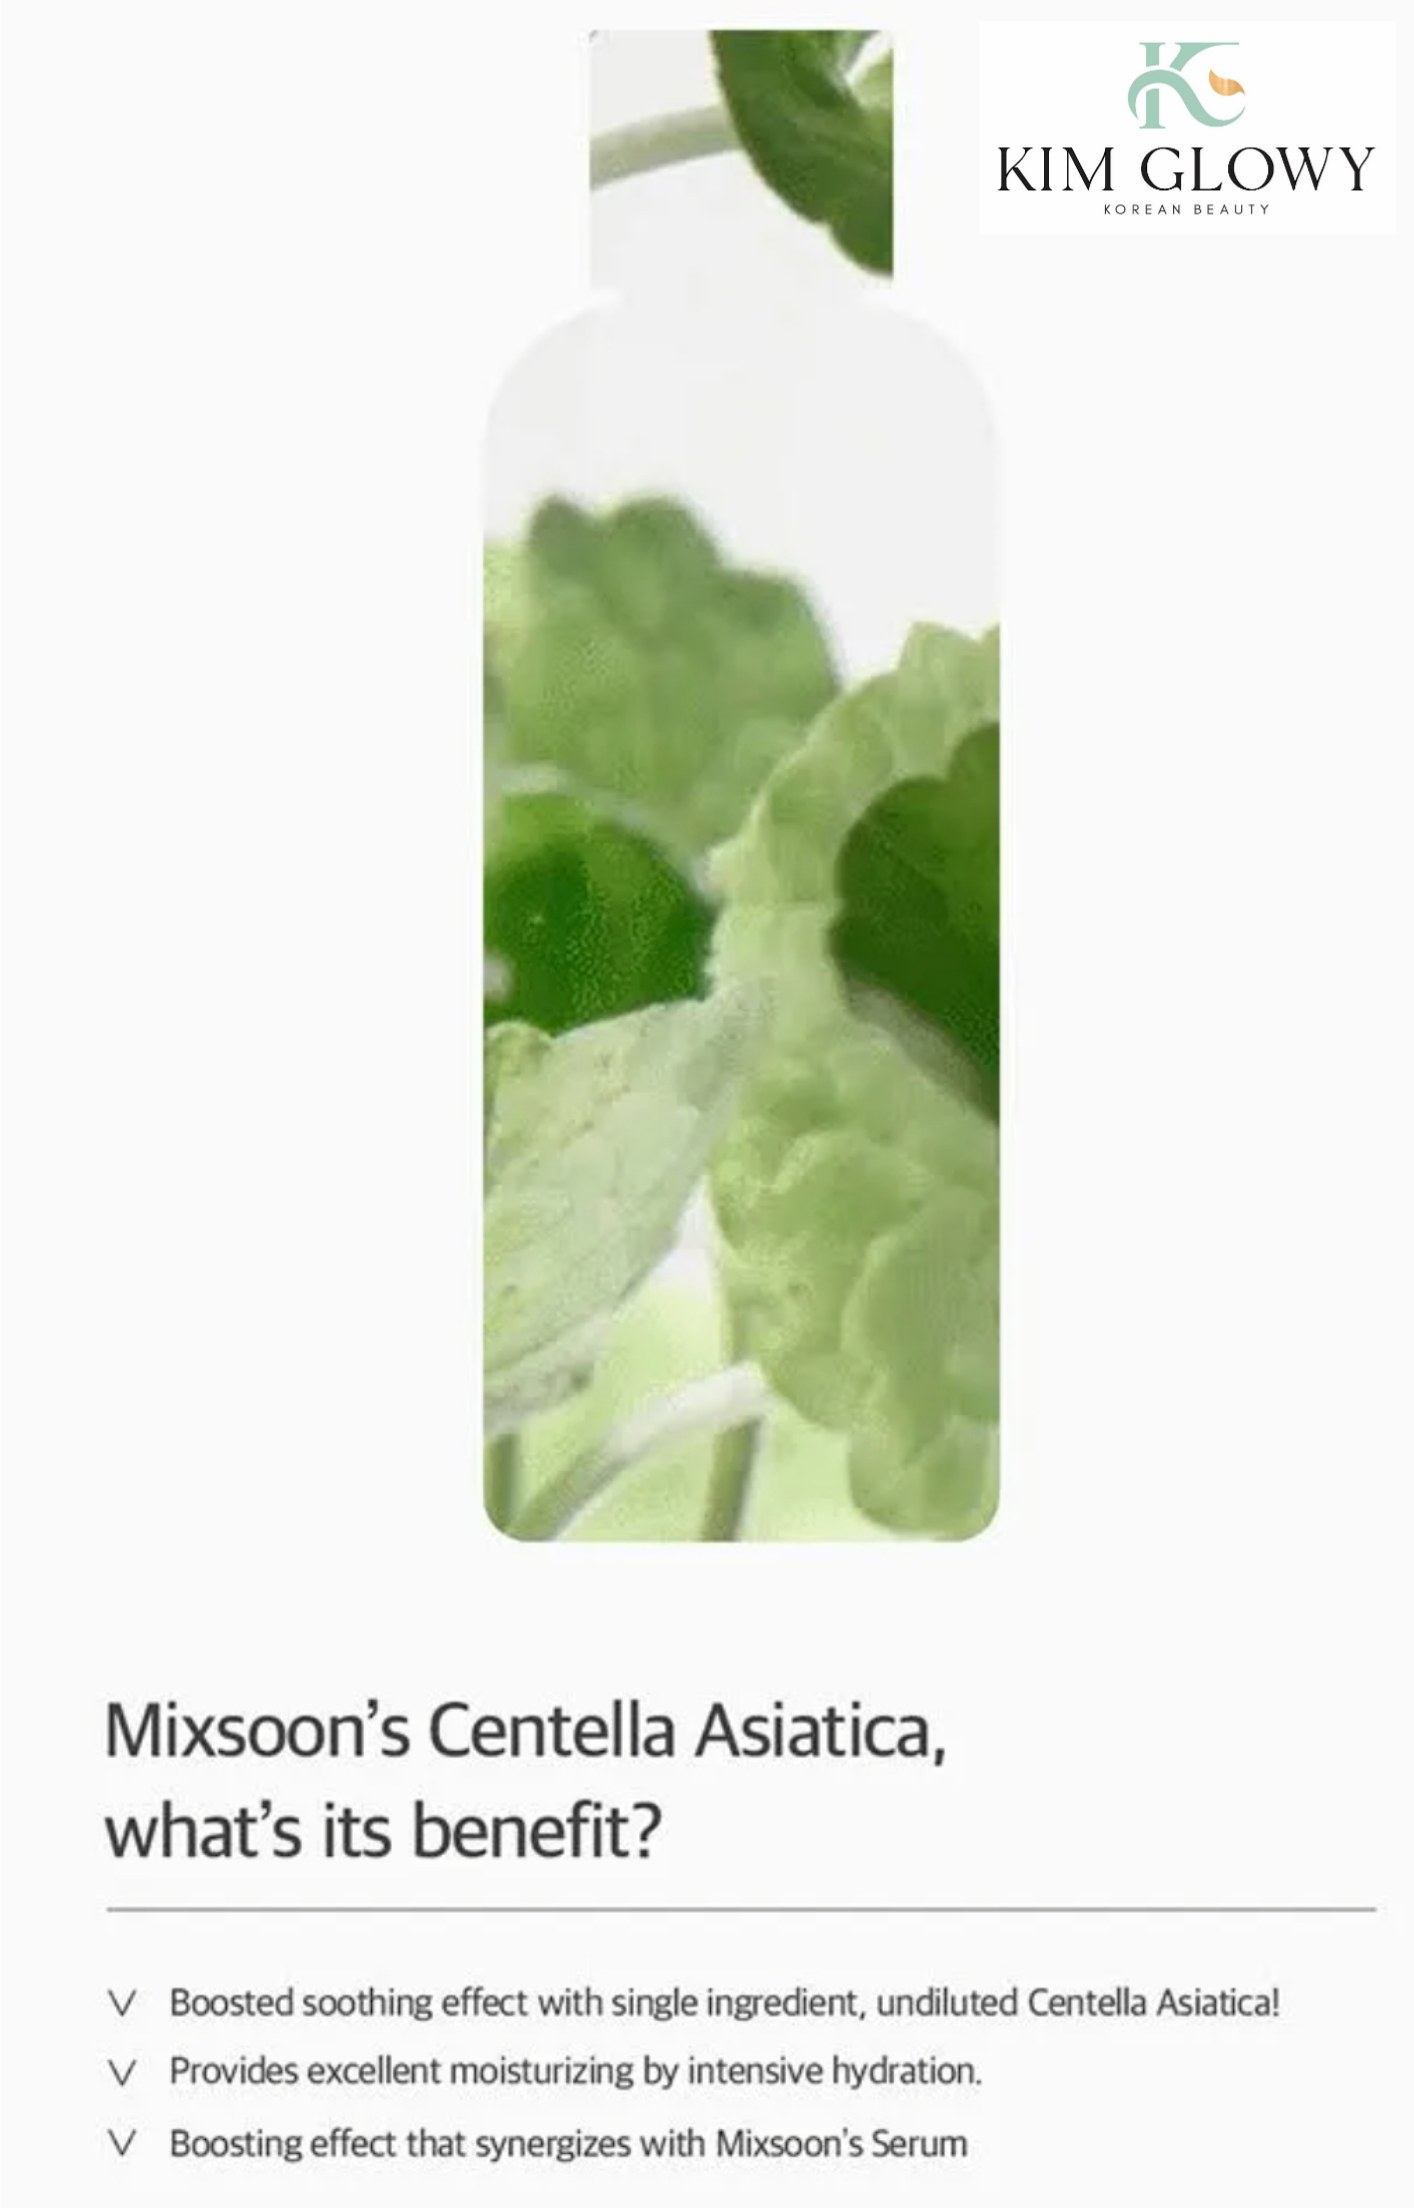 MIXSOON Centella Asiatica Toner - 150ml